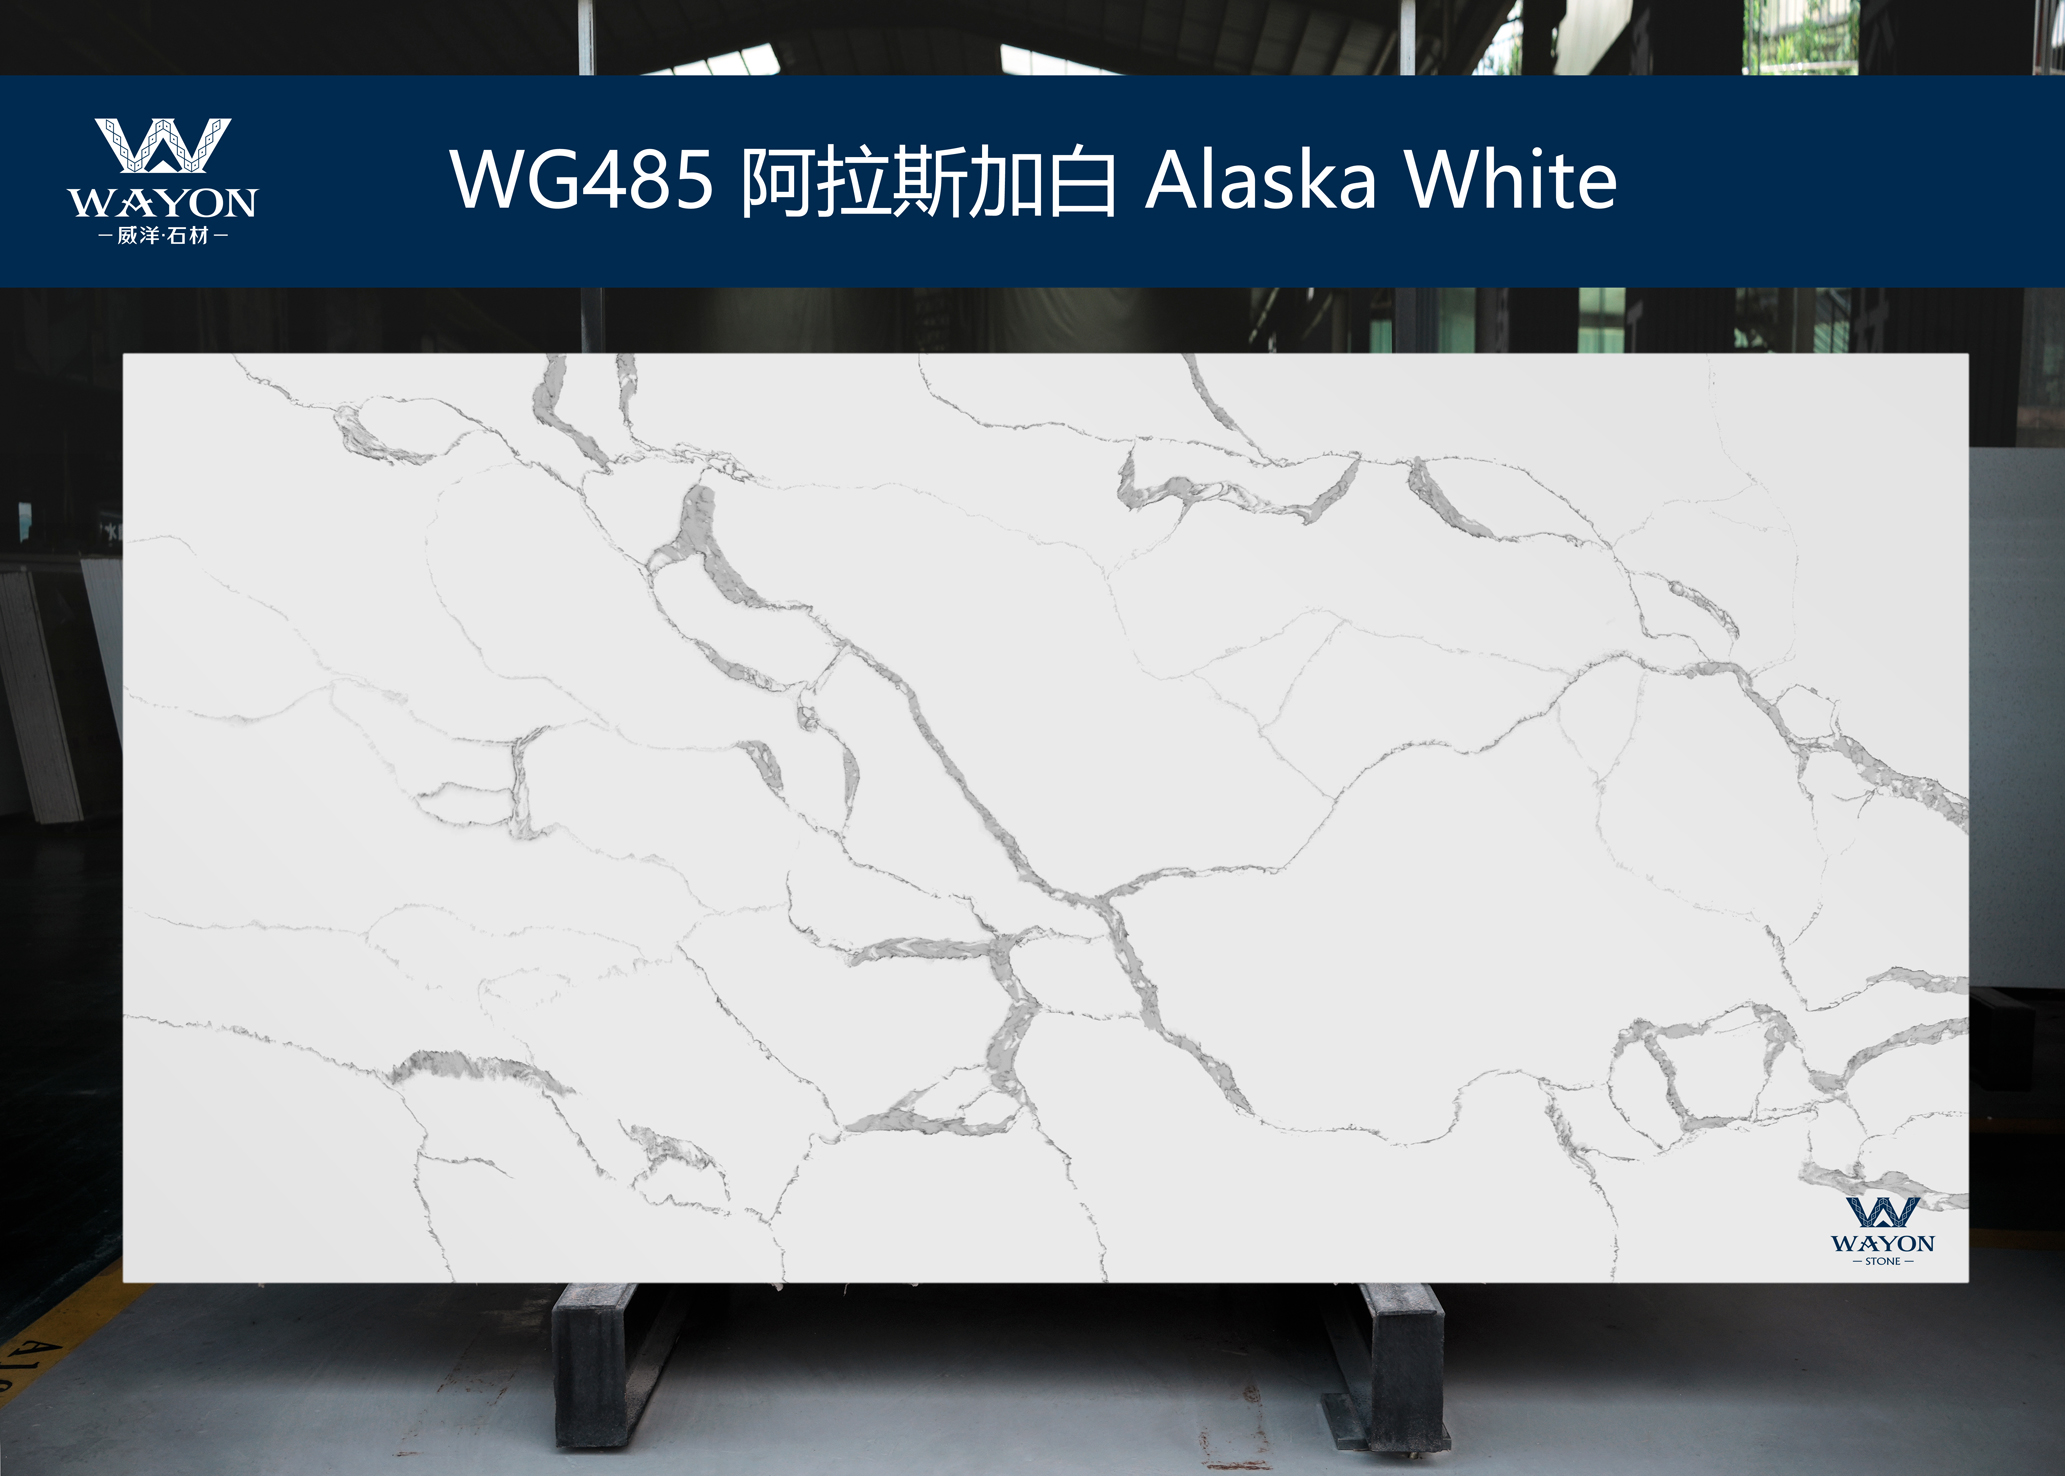 WG485 Alaska White